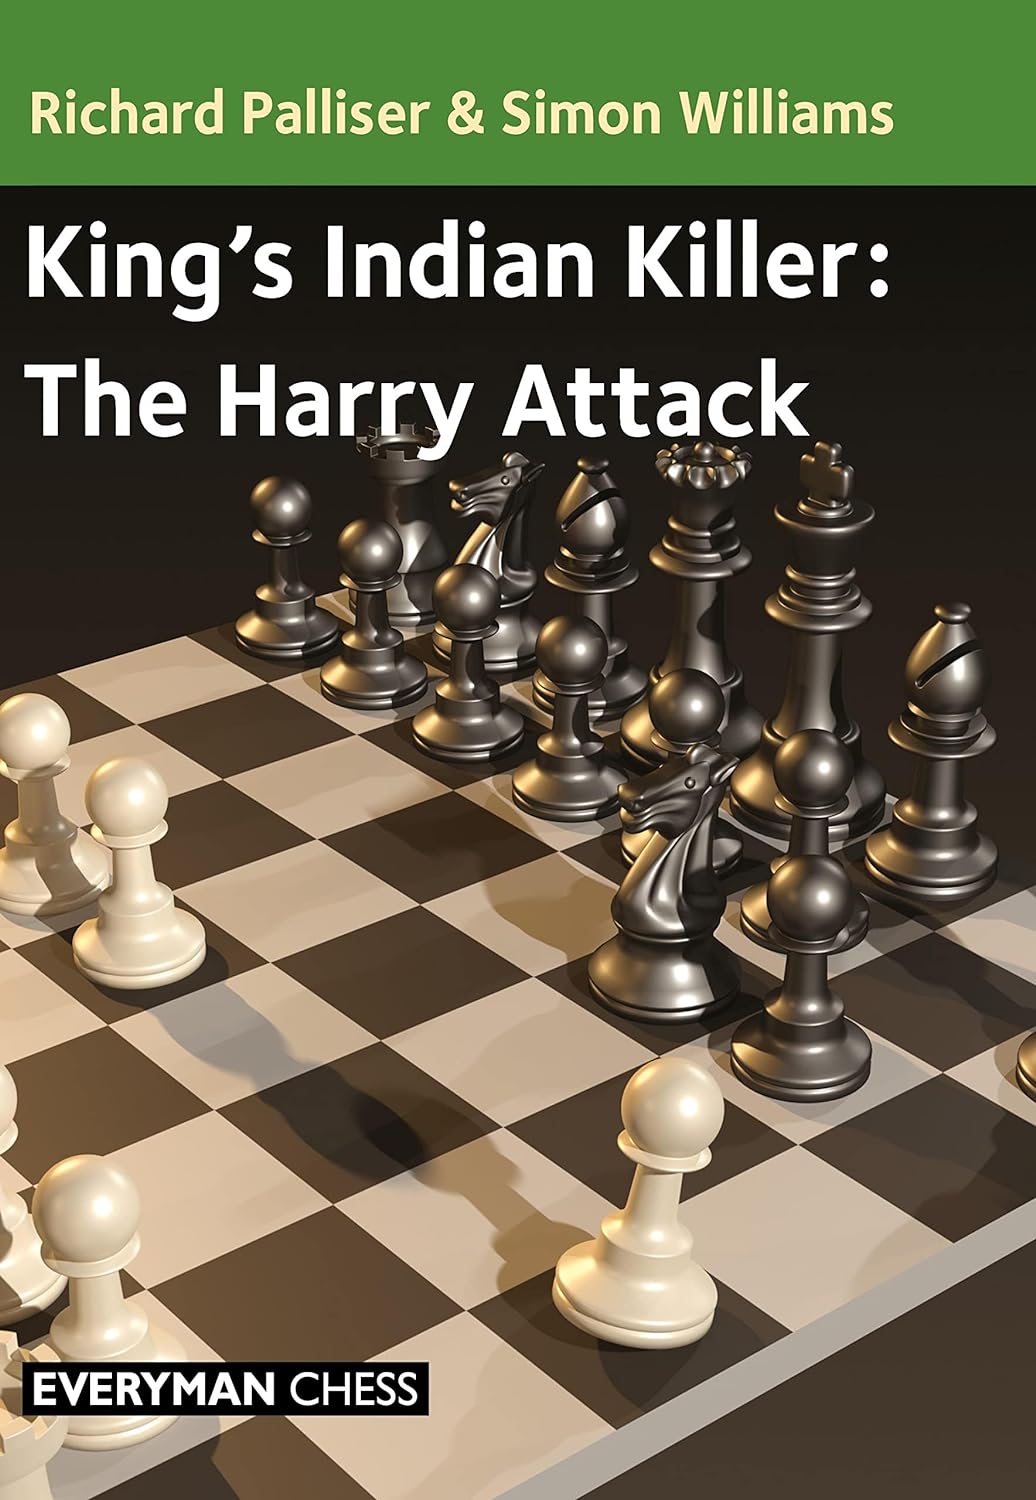 King's Indian Killer: The Harry Attack, Simon Williams and Richard Palliser, Everyman Chess, ISBN-13 ‏ : ‎ 978-1781947067